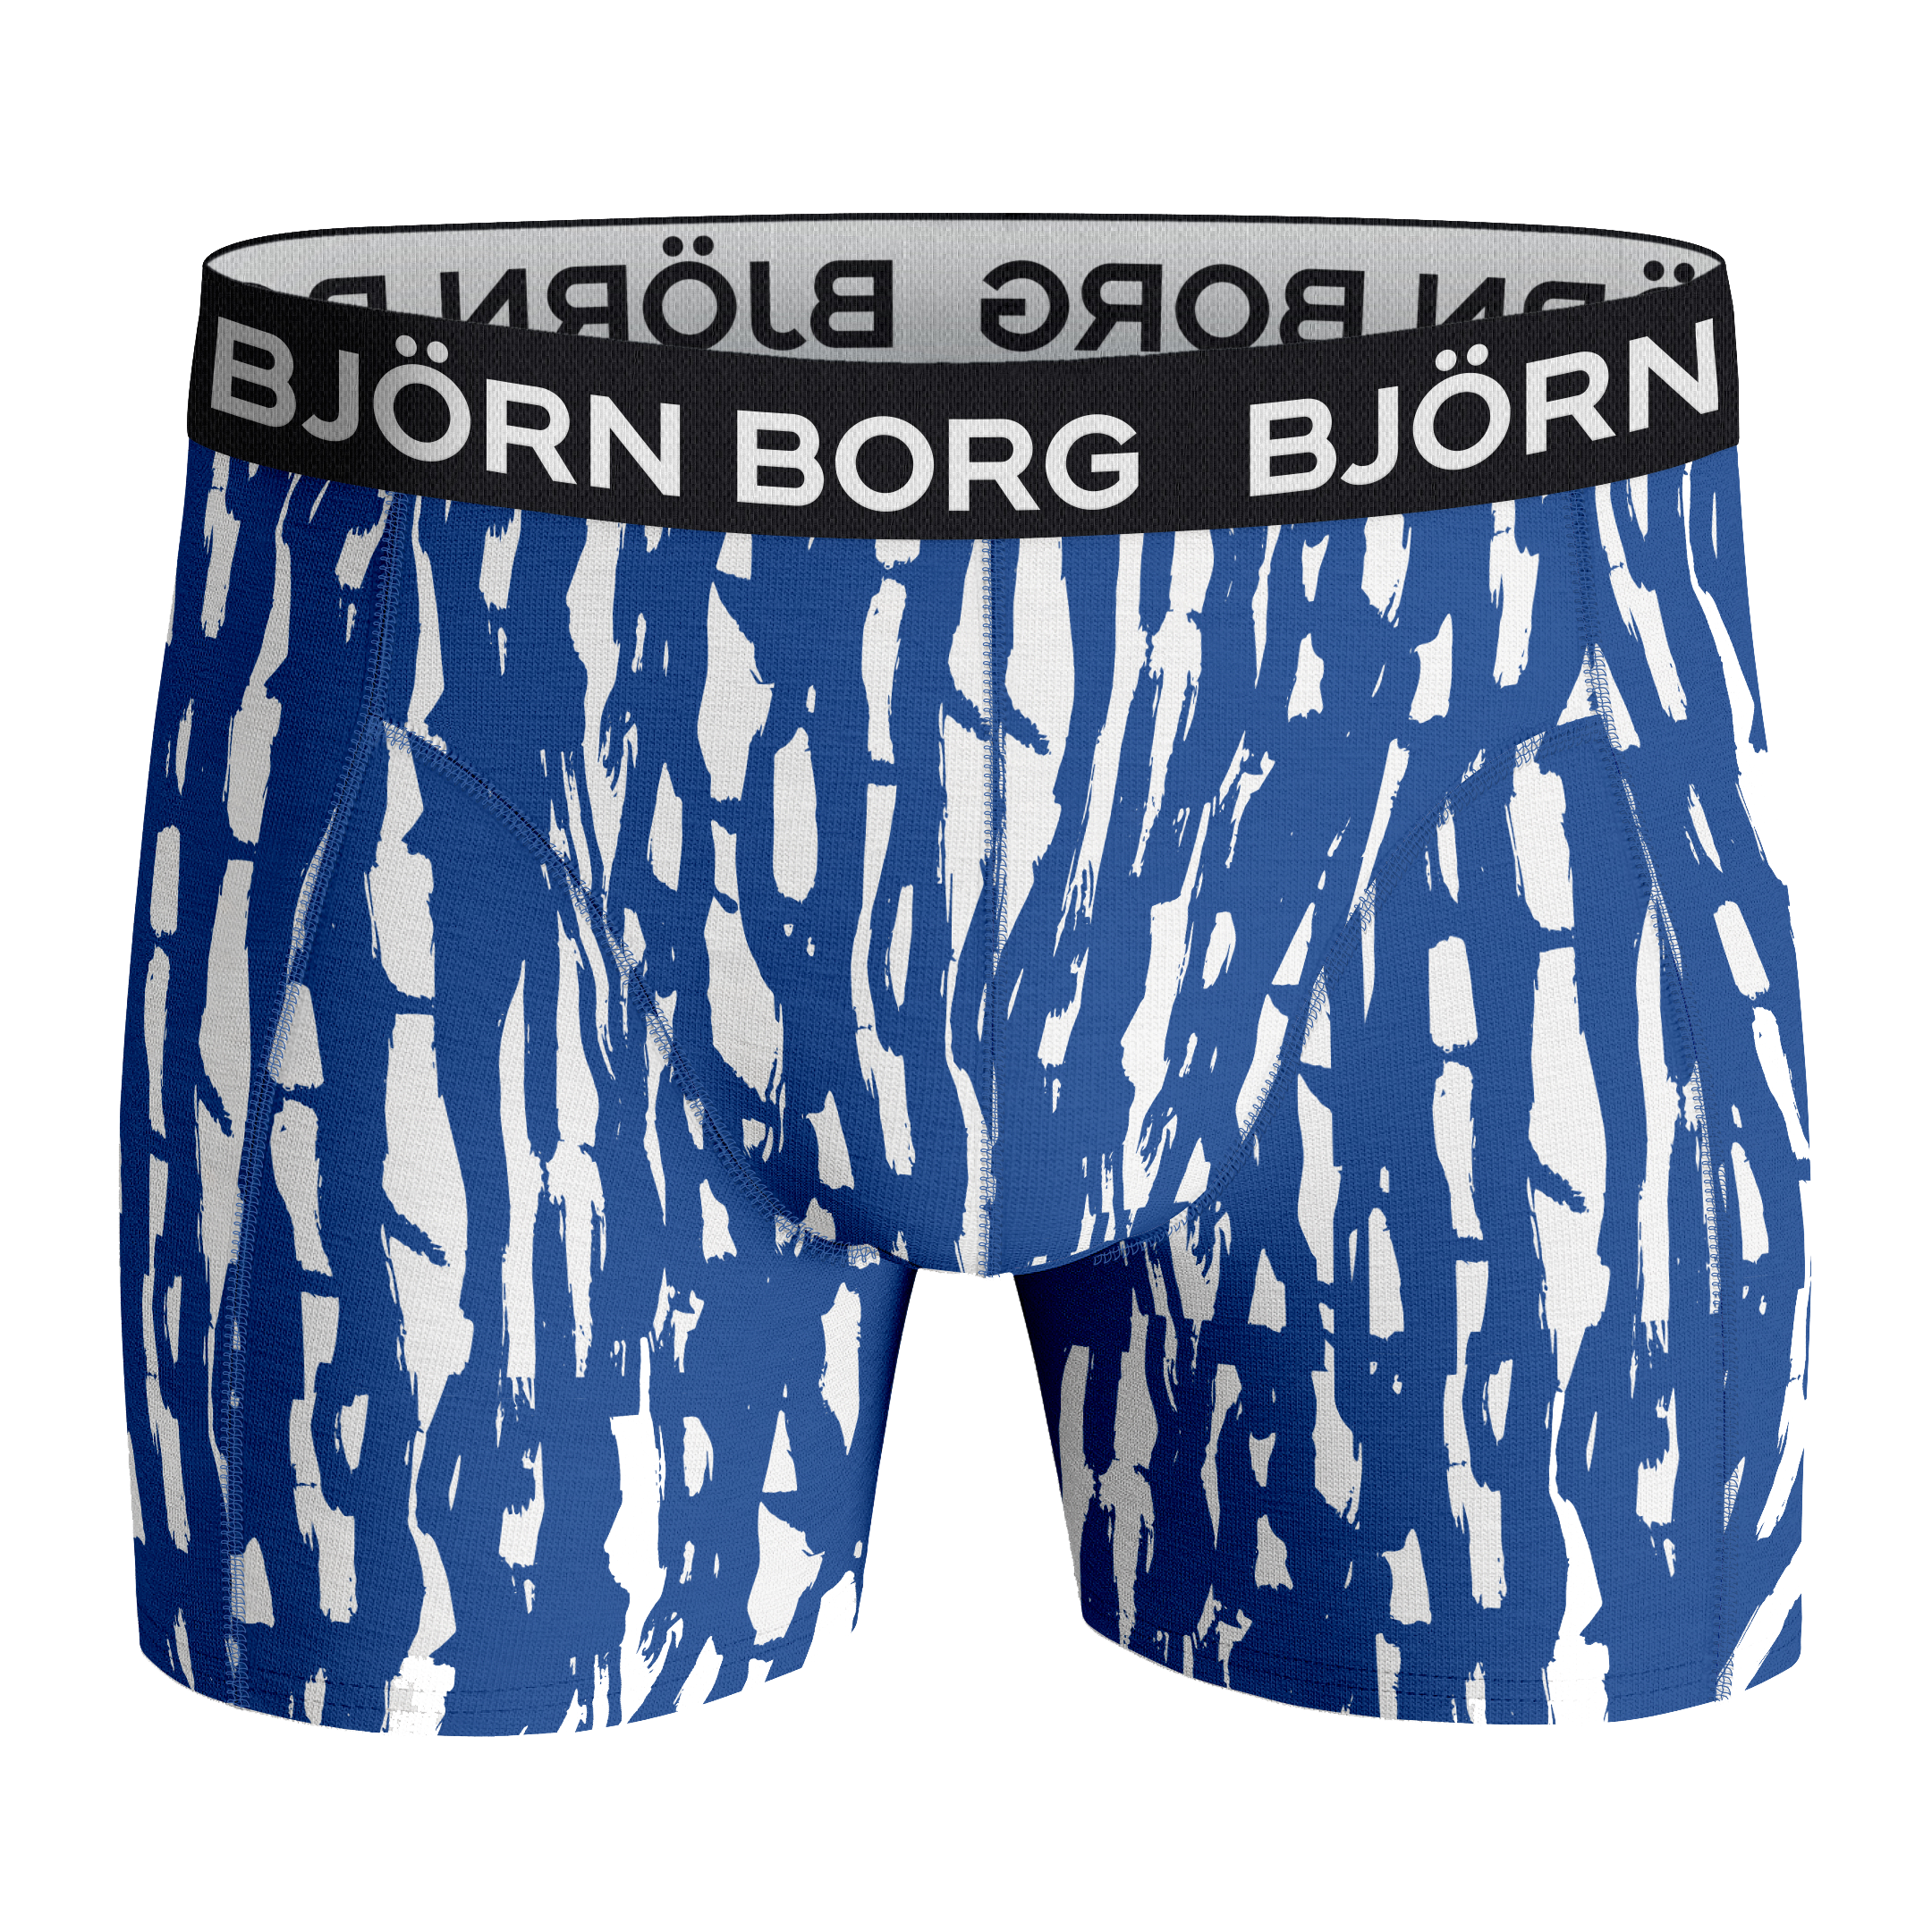 Björn Borg  Bjorn Borg Cotton Stretch Boxer 5P, Boxer Briefs for Men,  Multi-Packs Available at  Men's Clothing store